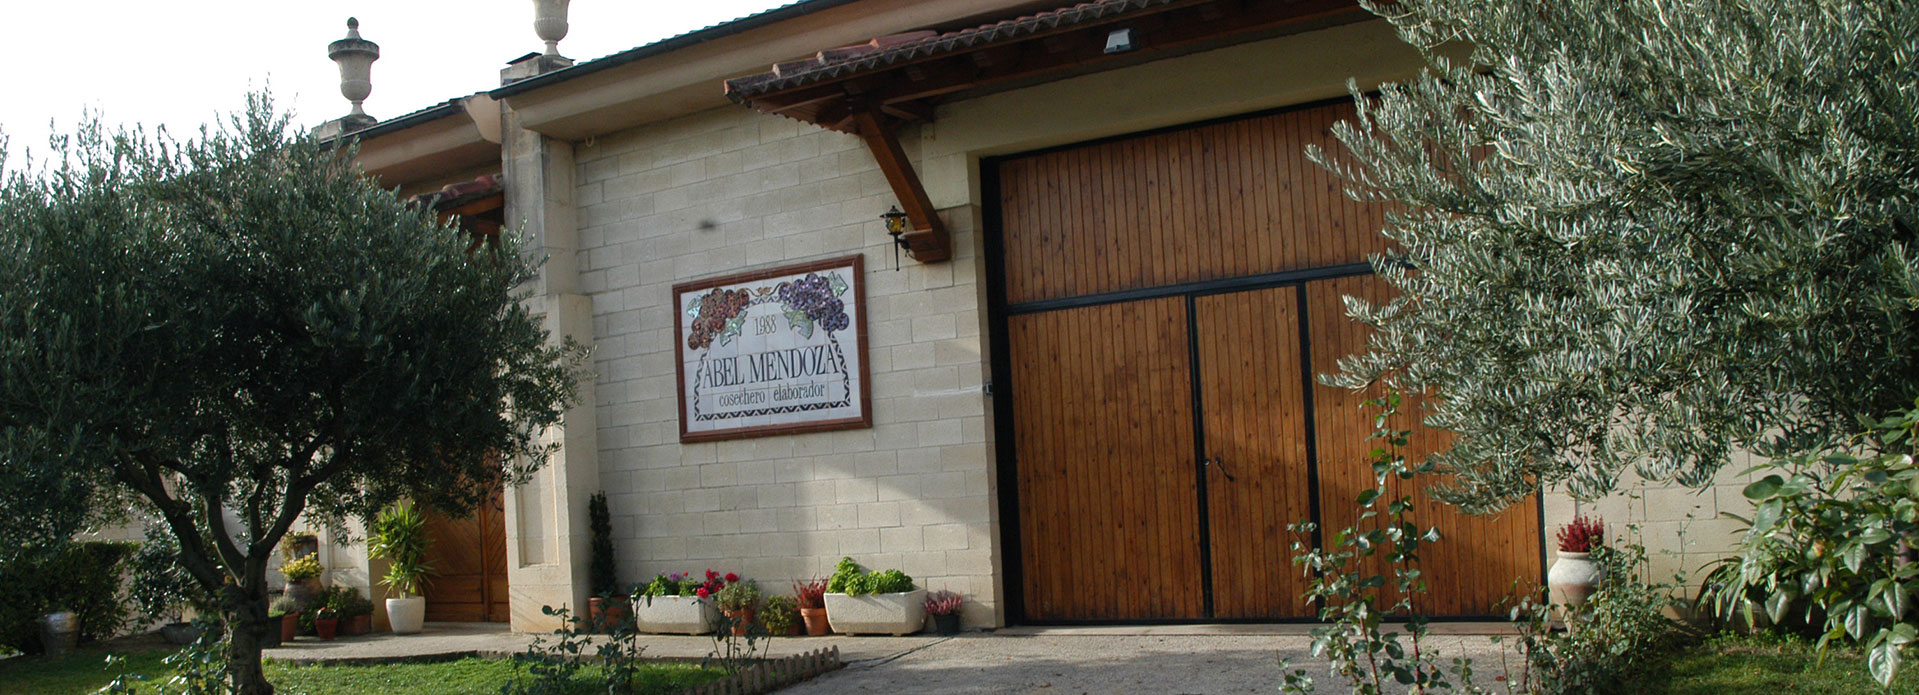 The front entrance to the Abel Mendoza winery in San Vicente de la Sonsierra, Rioja, Spain.